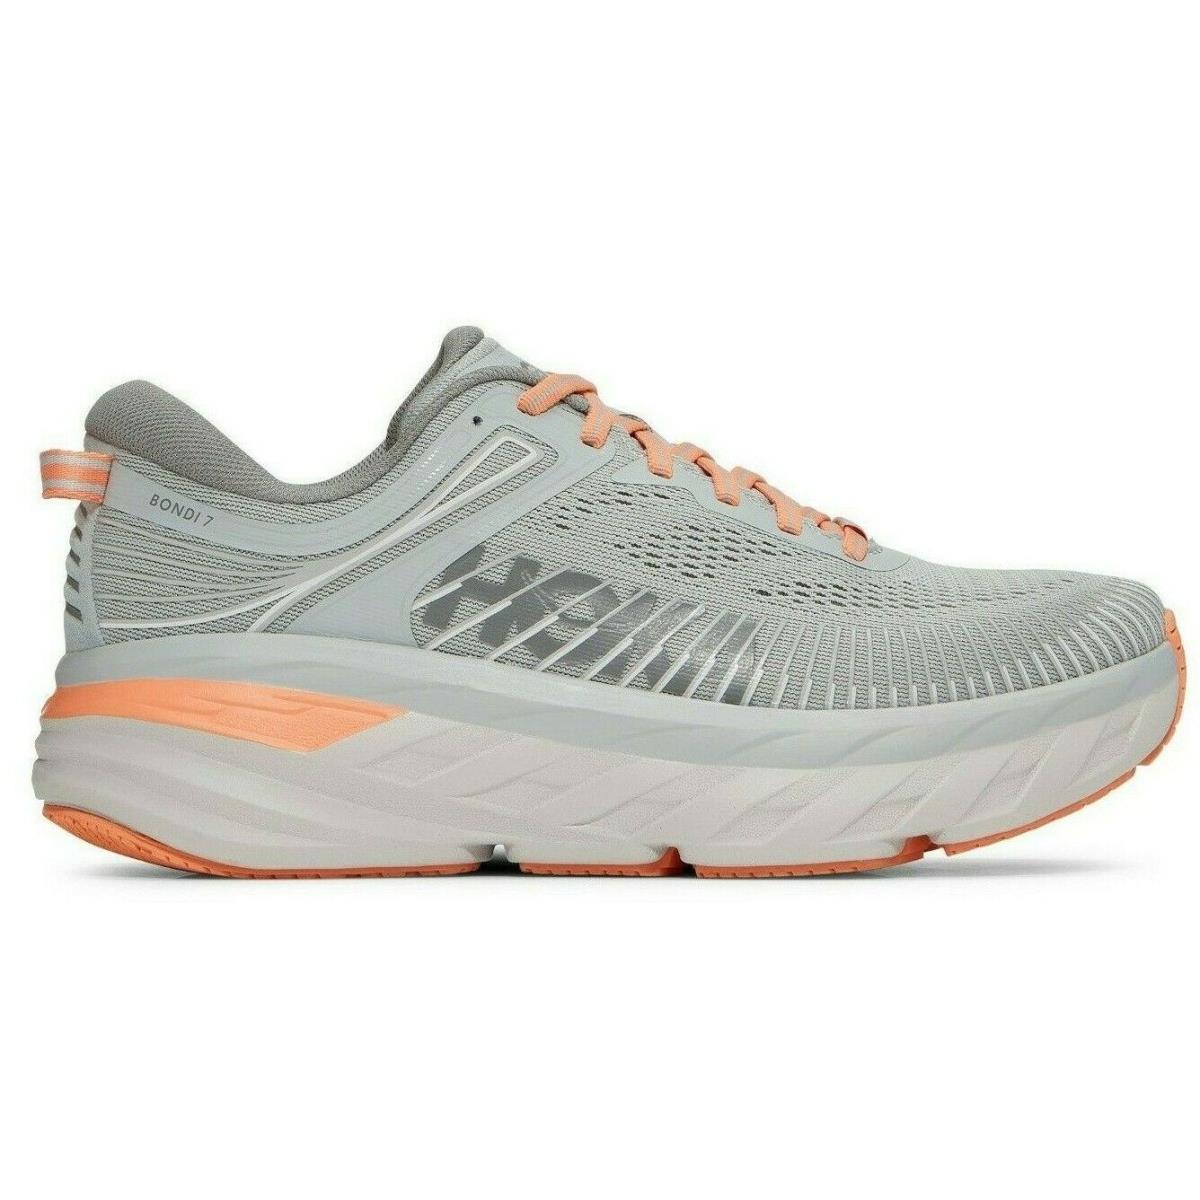 Hoka One One Bondi 7 Running Shoes Women`s US Sizes 6-12 Colors Available Harbor Mist / Sharkskin